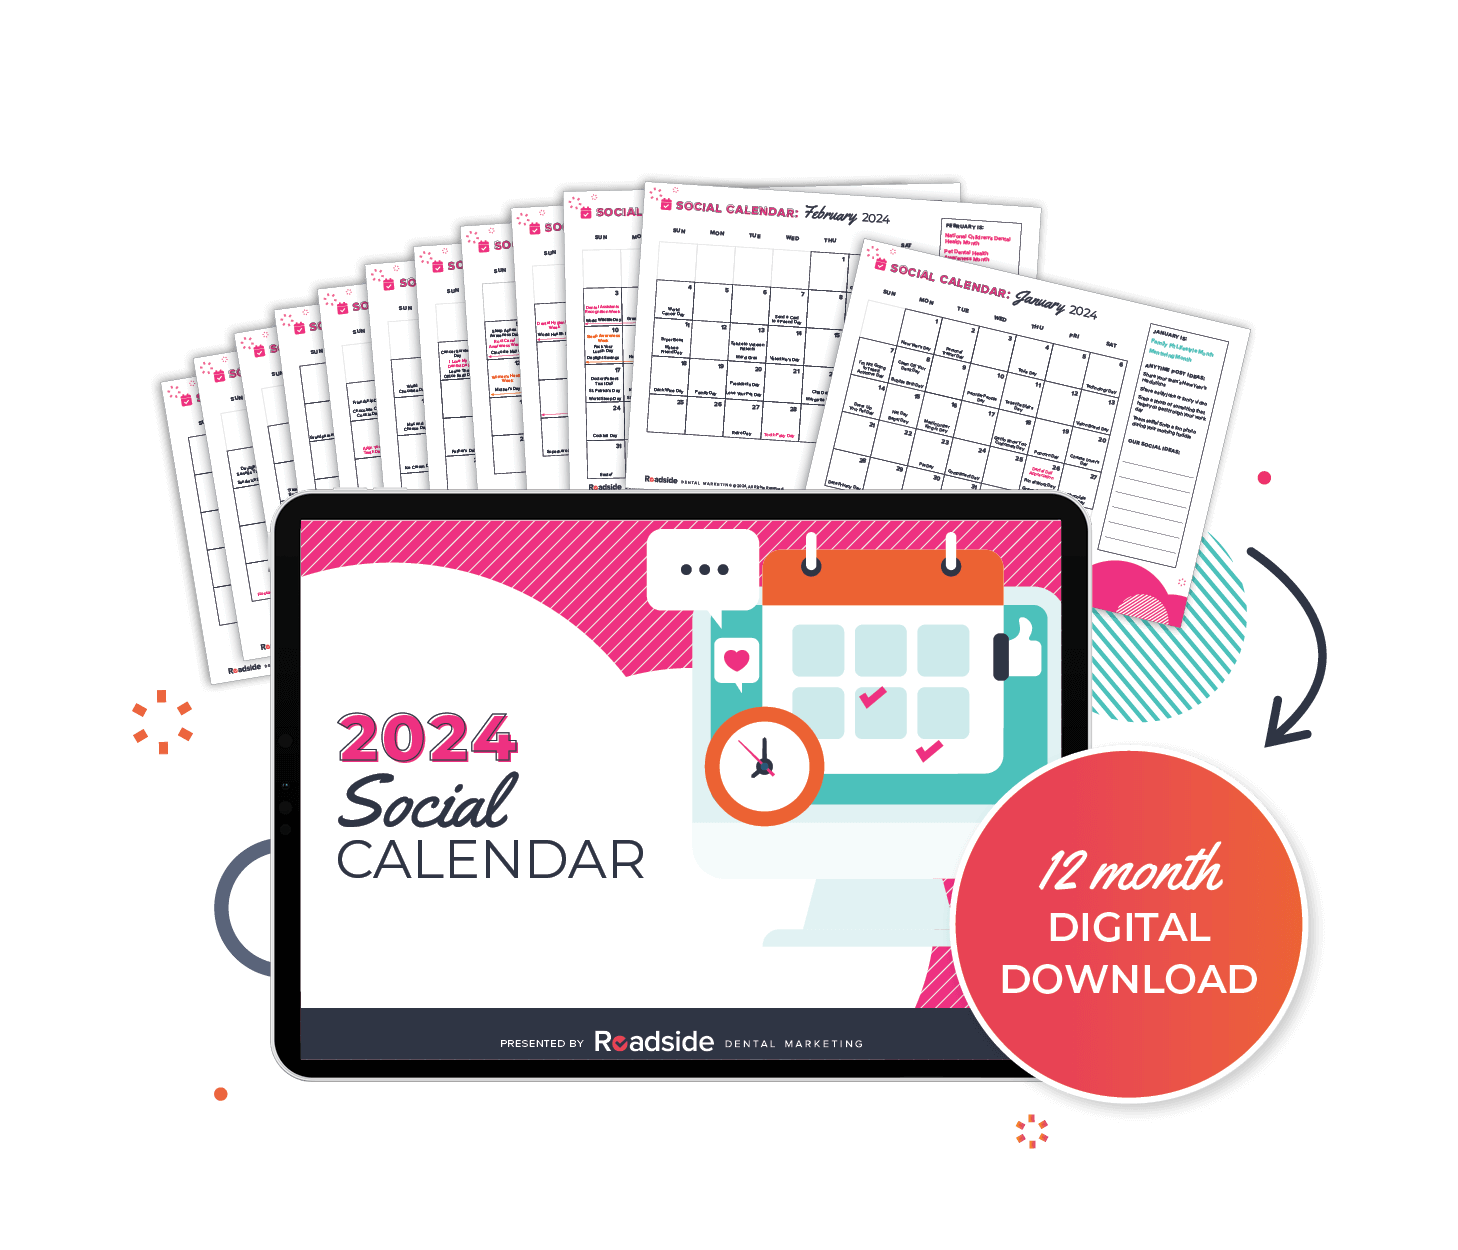 2024 Social Calendar - 12 month digital download